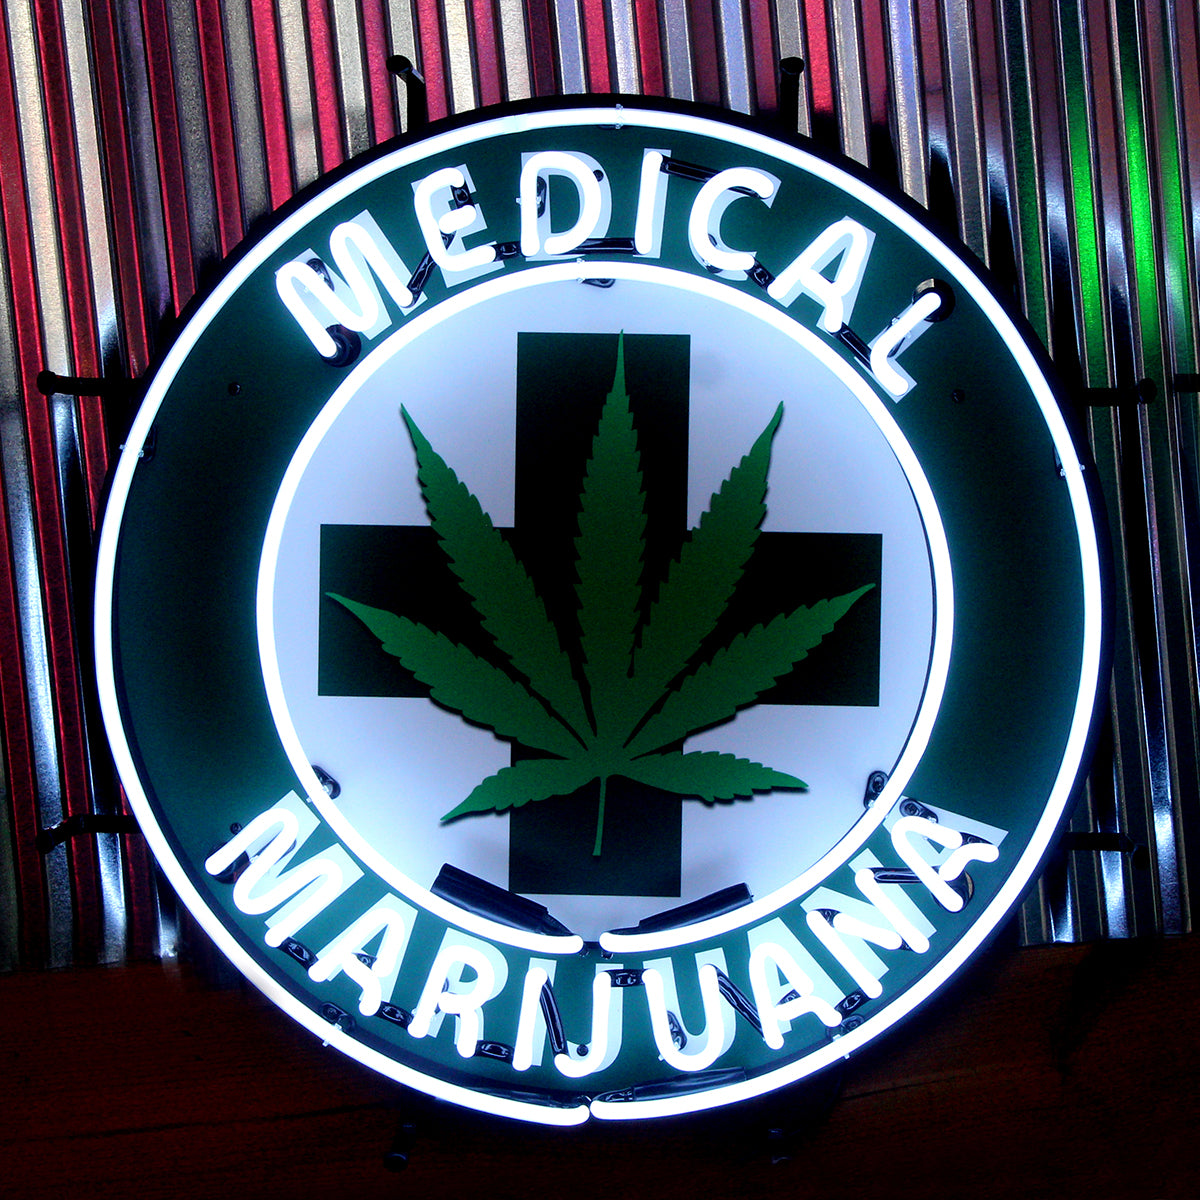 Medical Marijuana Neon Sign